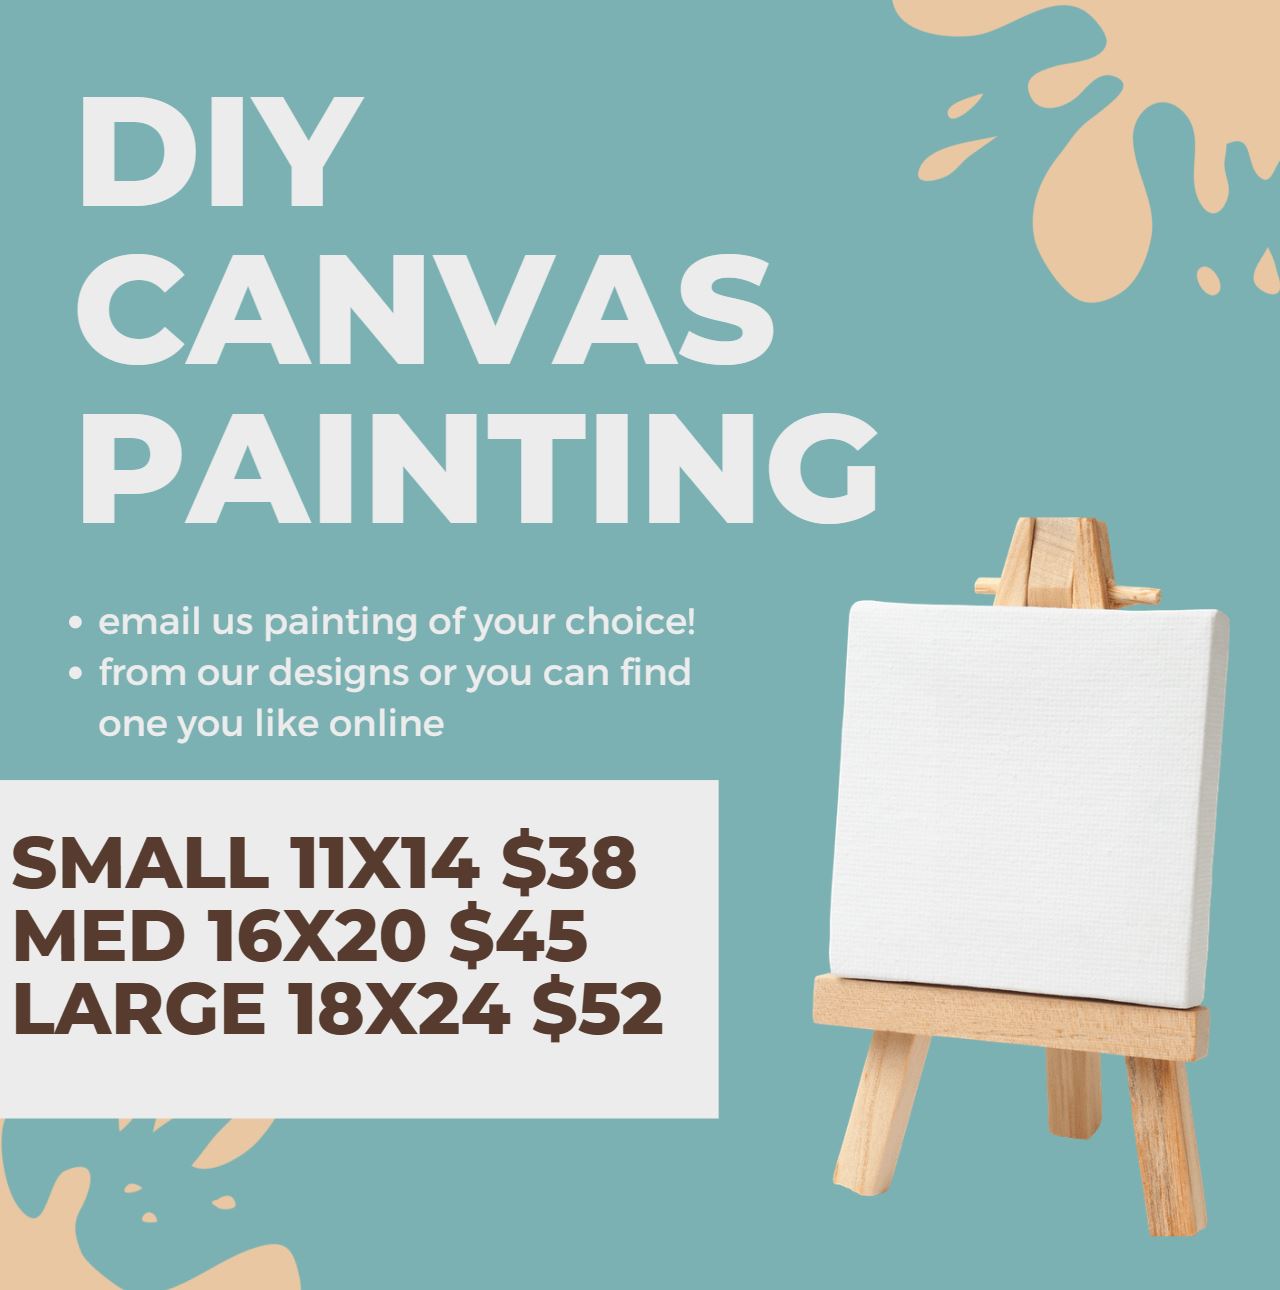 DIY CANVAS PAINTING  Large 18x24| Canvas